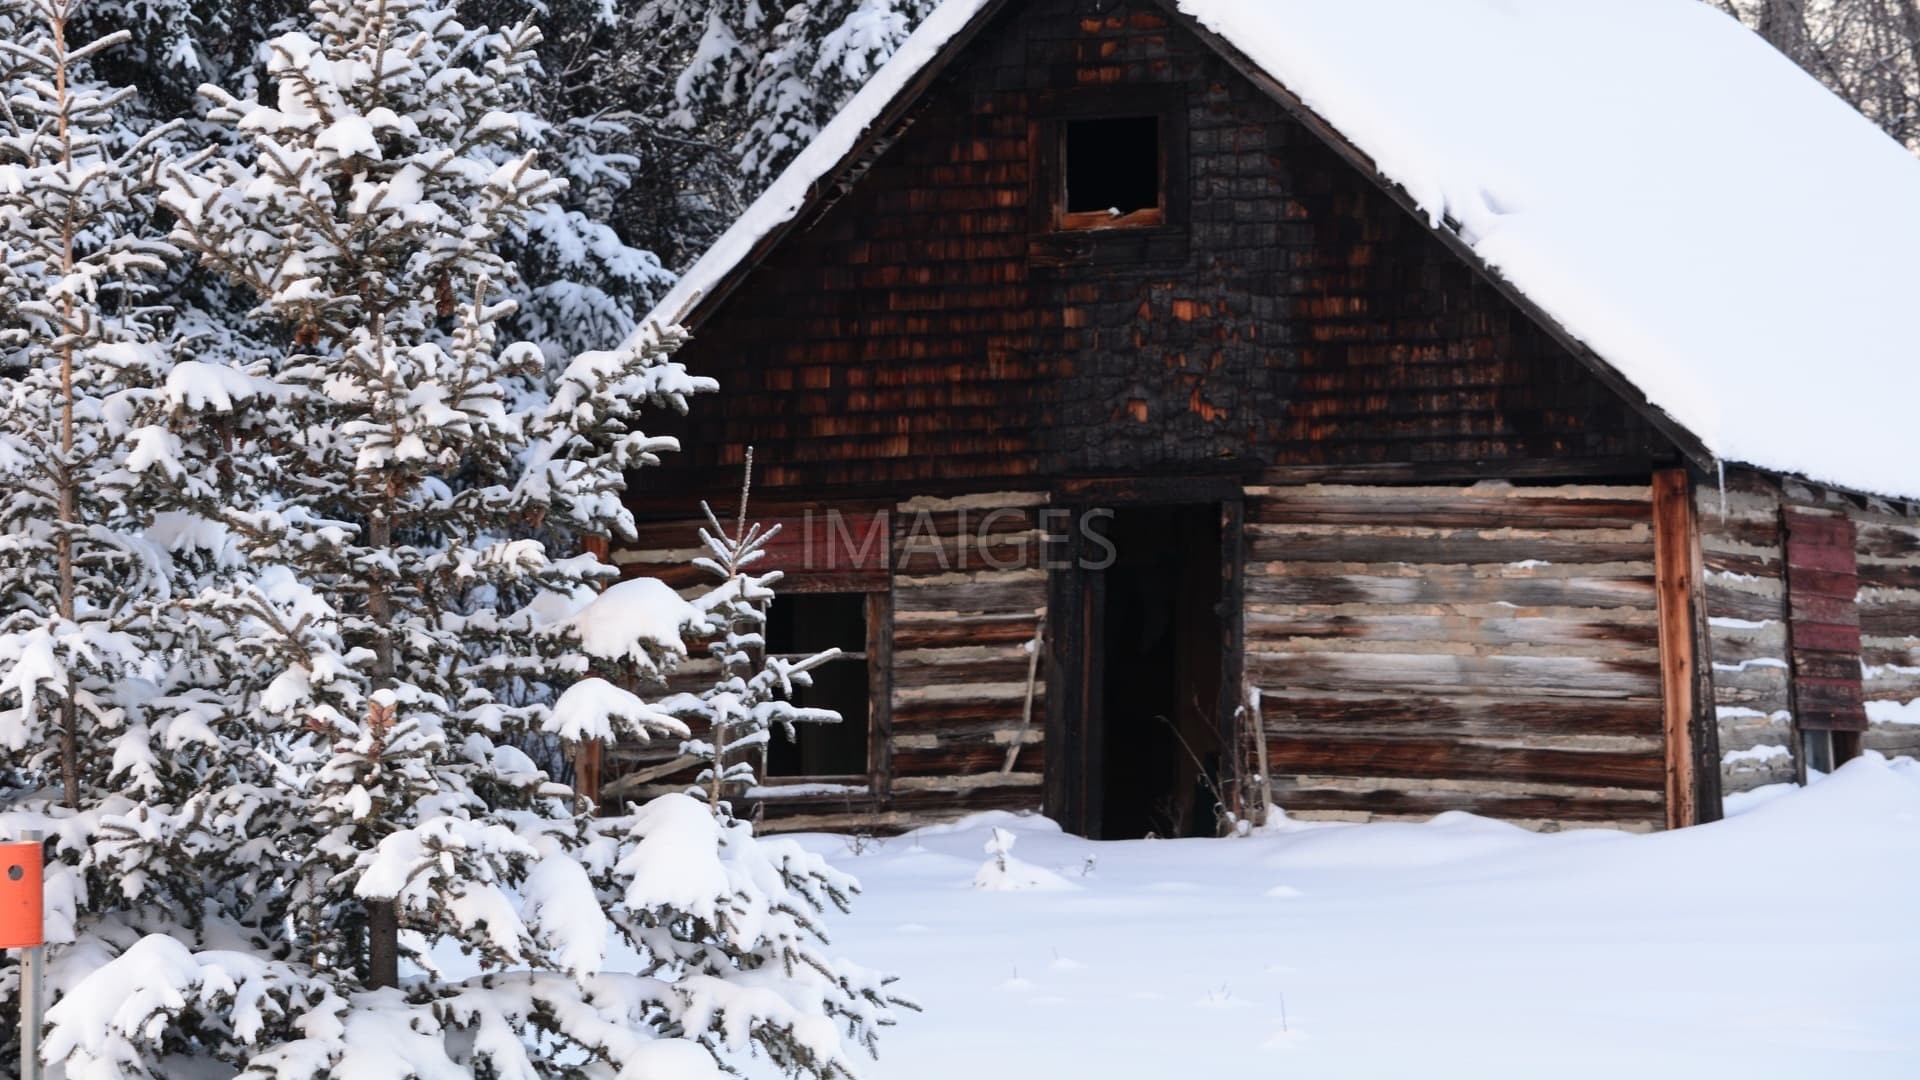 1920x1080 log cabin snow wallpaper. log cabin snow wallpaper c